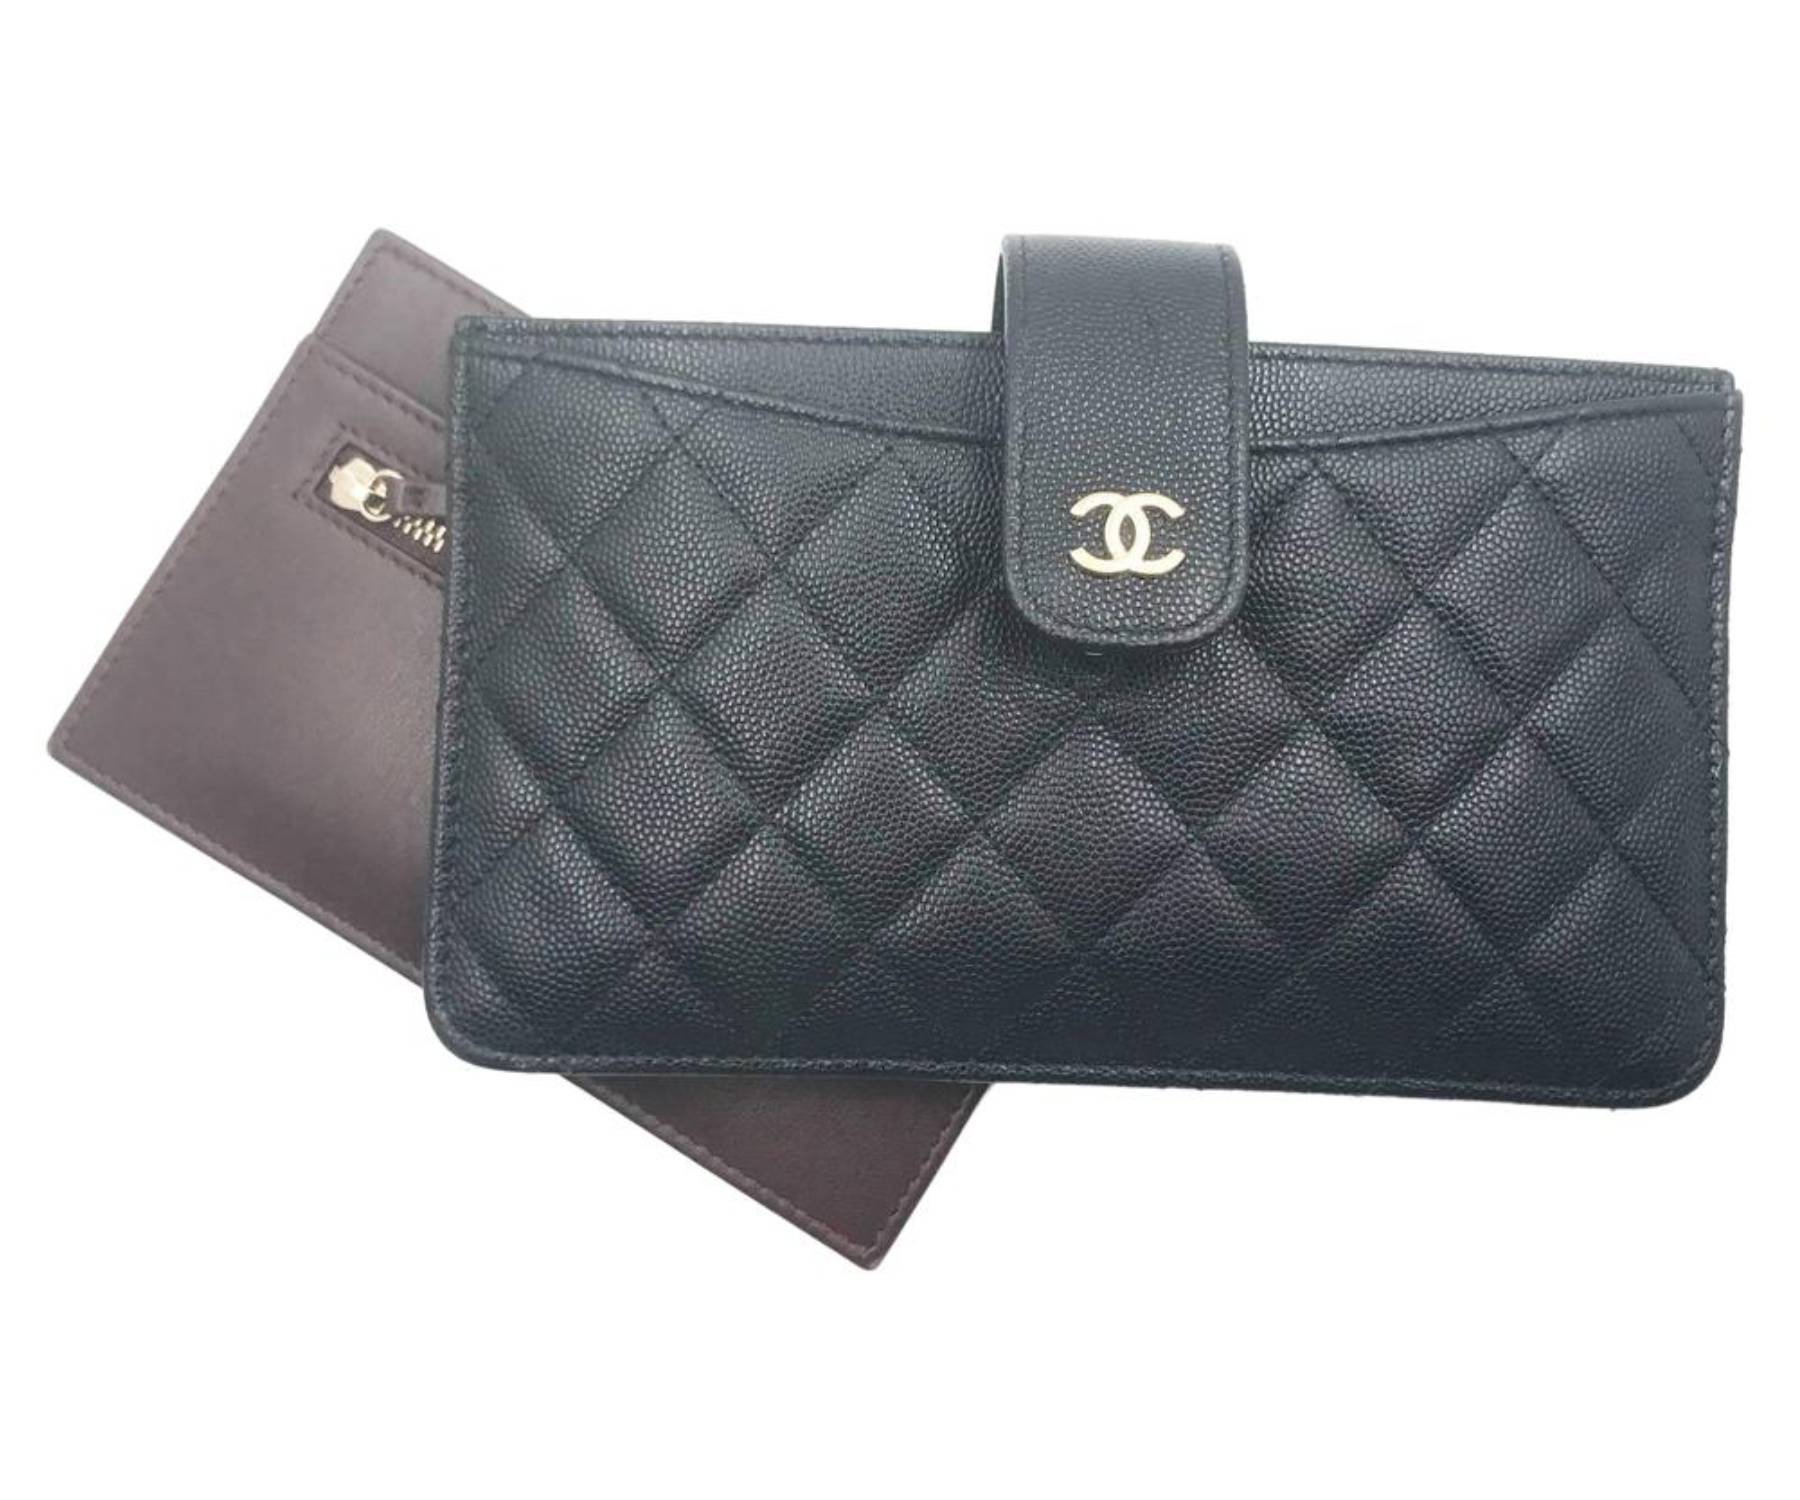 Chanel Classic Black Caviar 2 Set Pouch Long Wallet